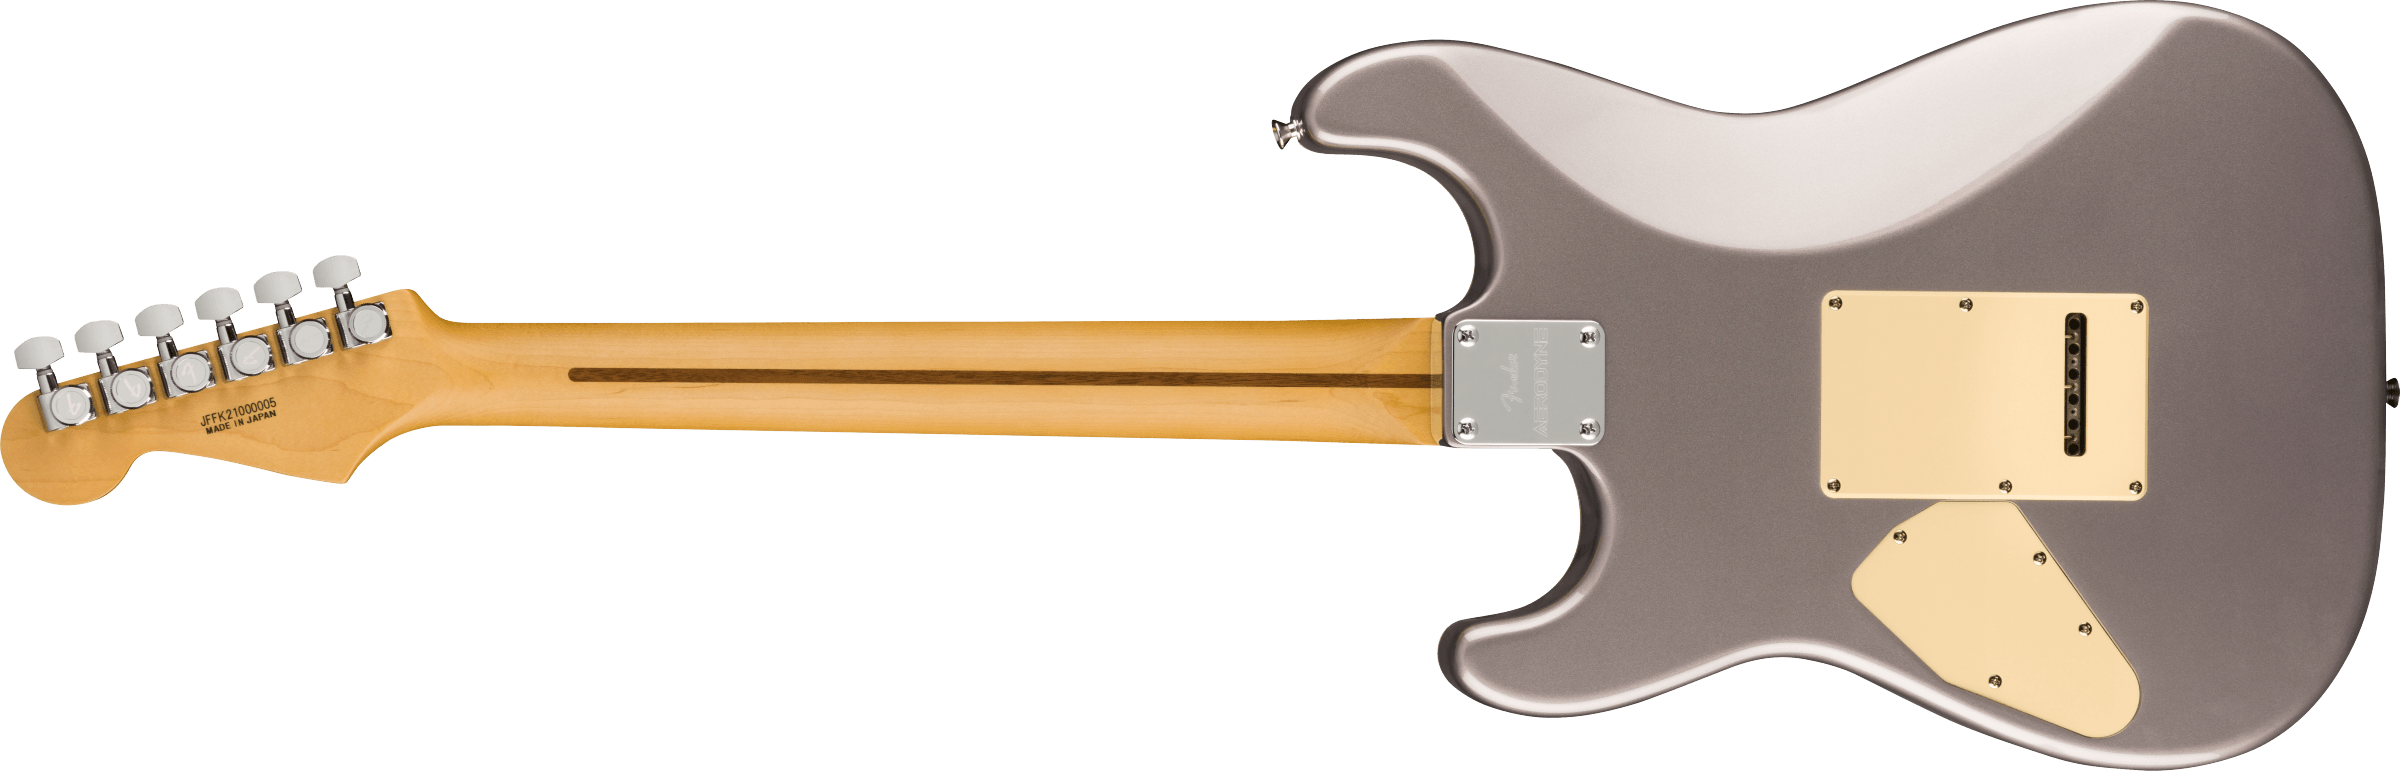 Fender Strat Aerodyne Special Jap Trem Hss Rw - Dolphin Gray Metallic - Guitarra eléctrica con forma de str. - Variation 1